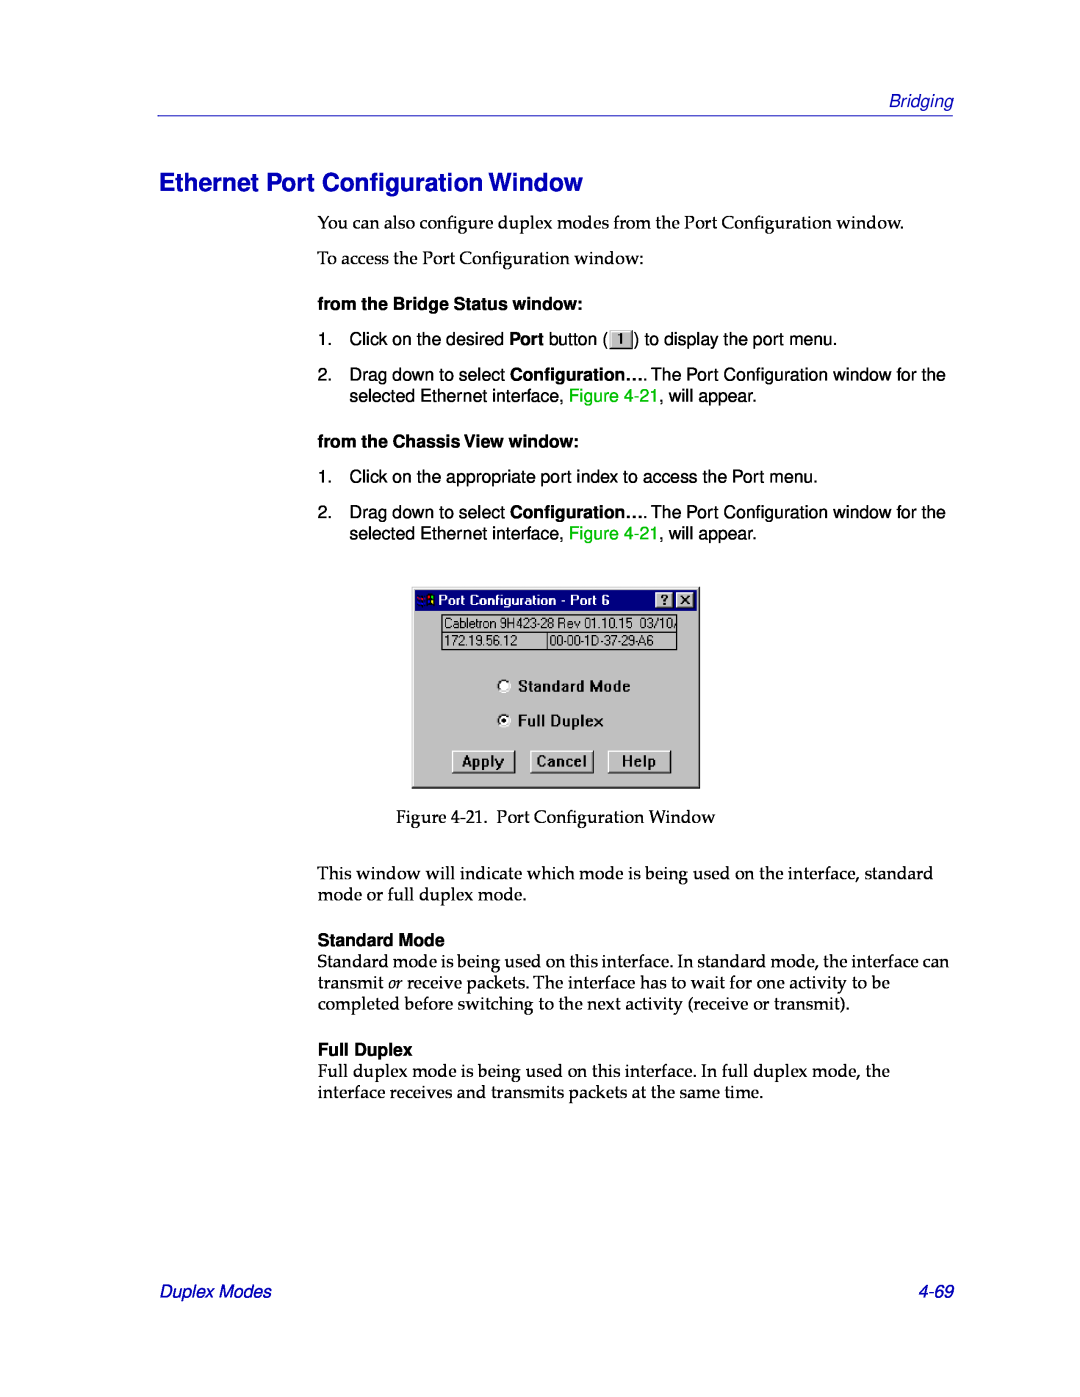 Cabletron Systems CSX200 Ethernet Port Conﬁguration Window, Standard Mode, 4-69, Bridging, from the Bridge Status window 